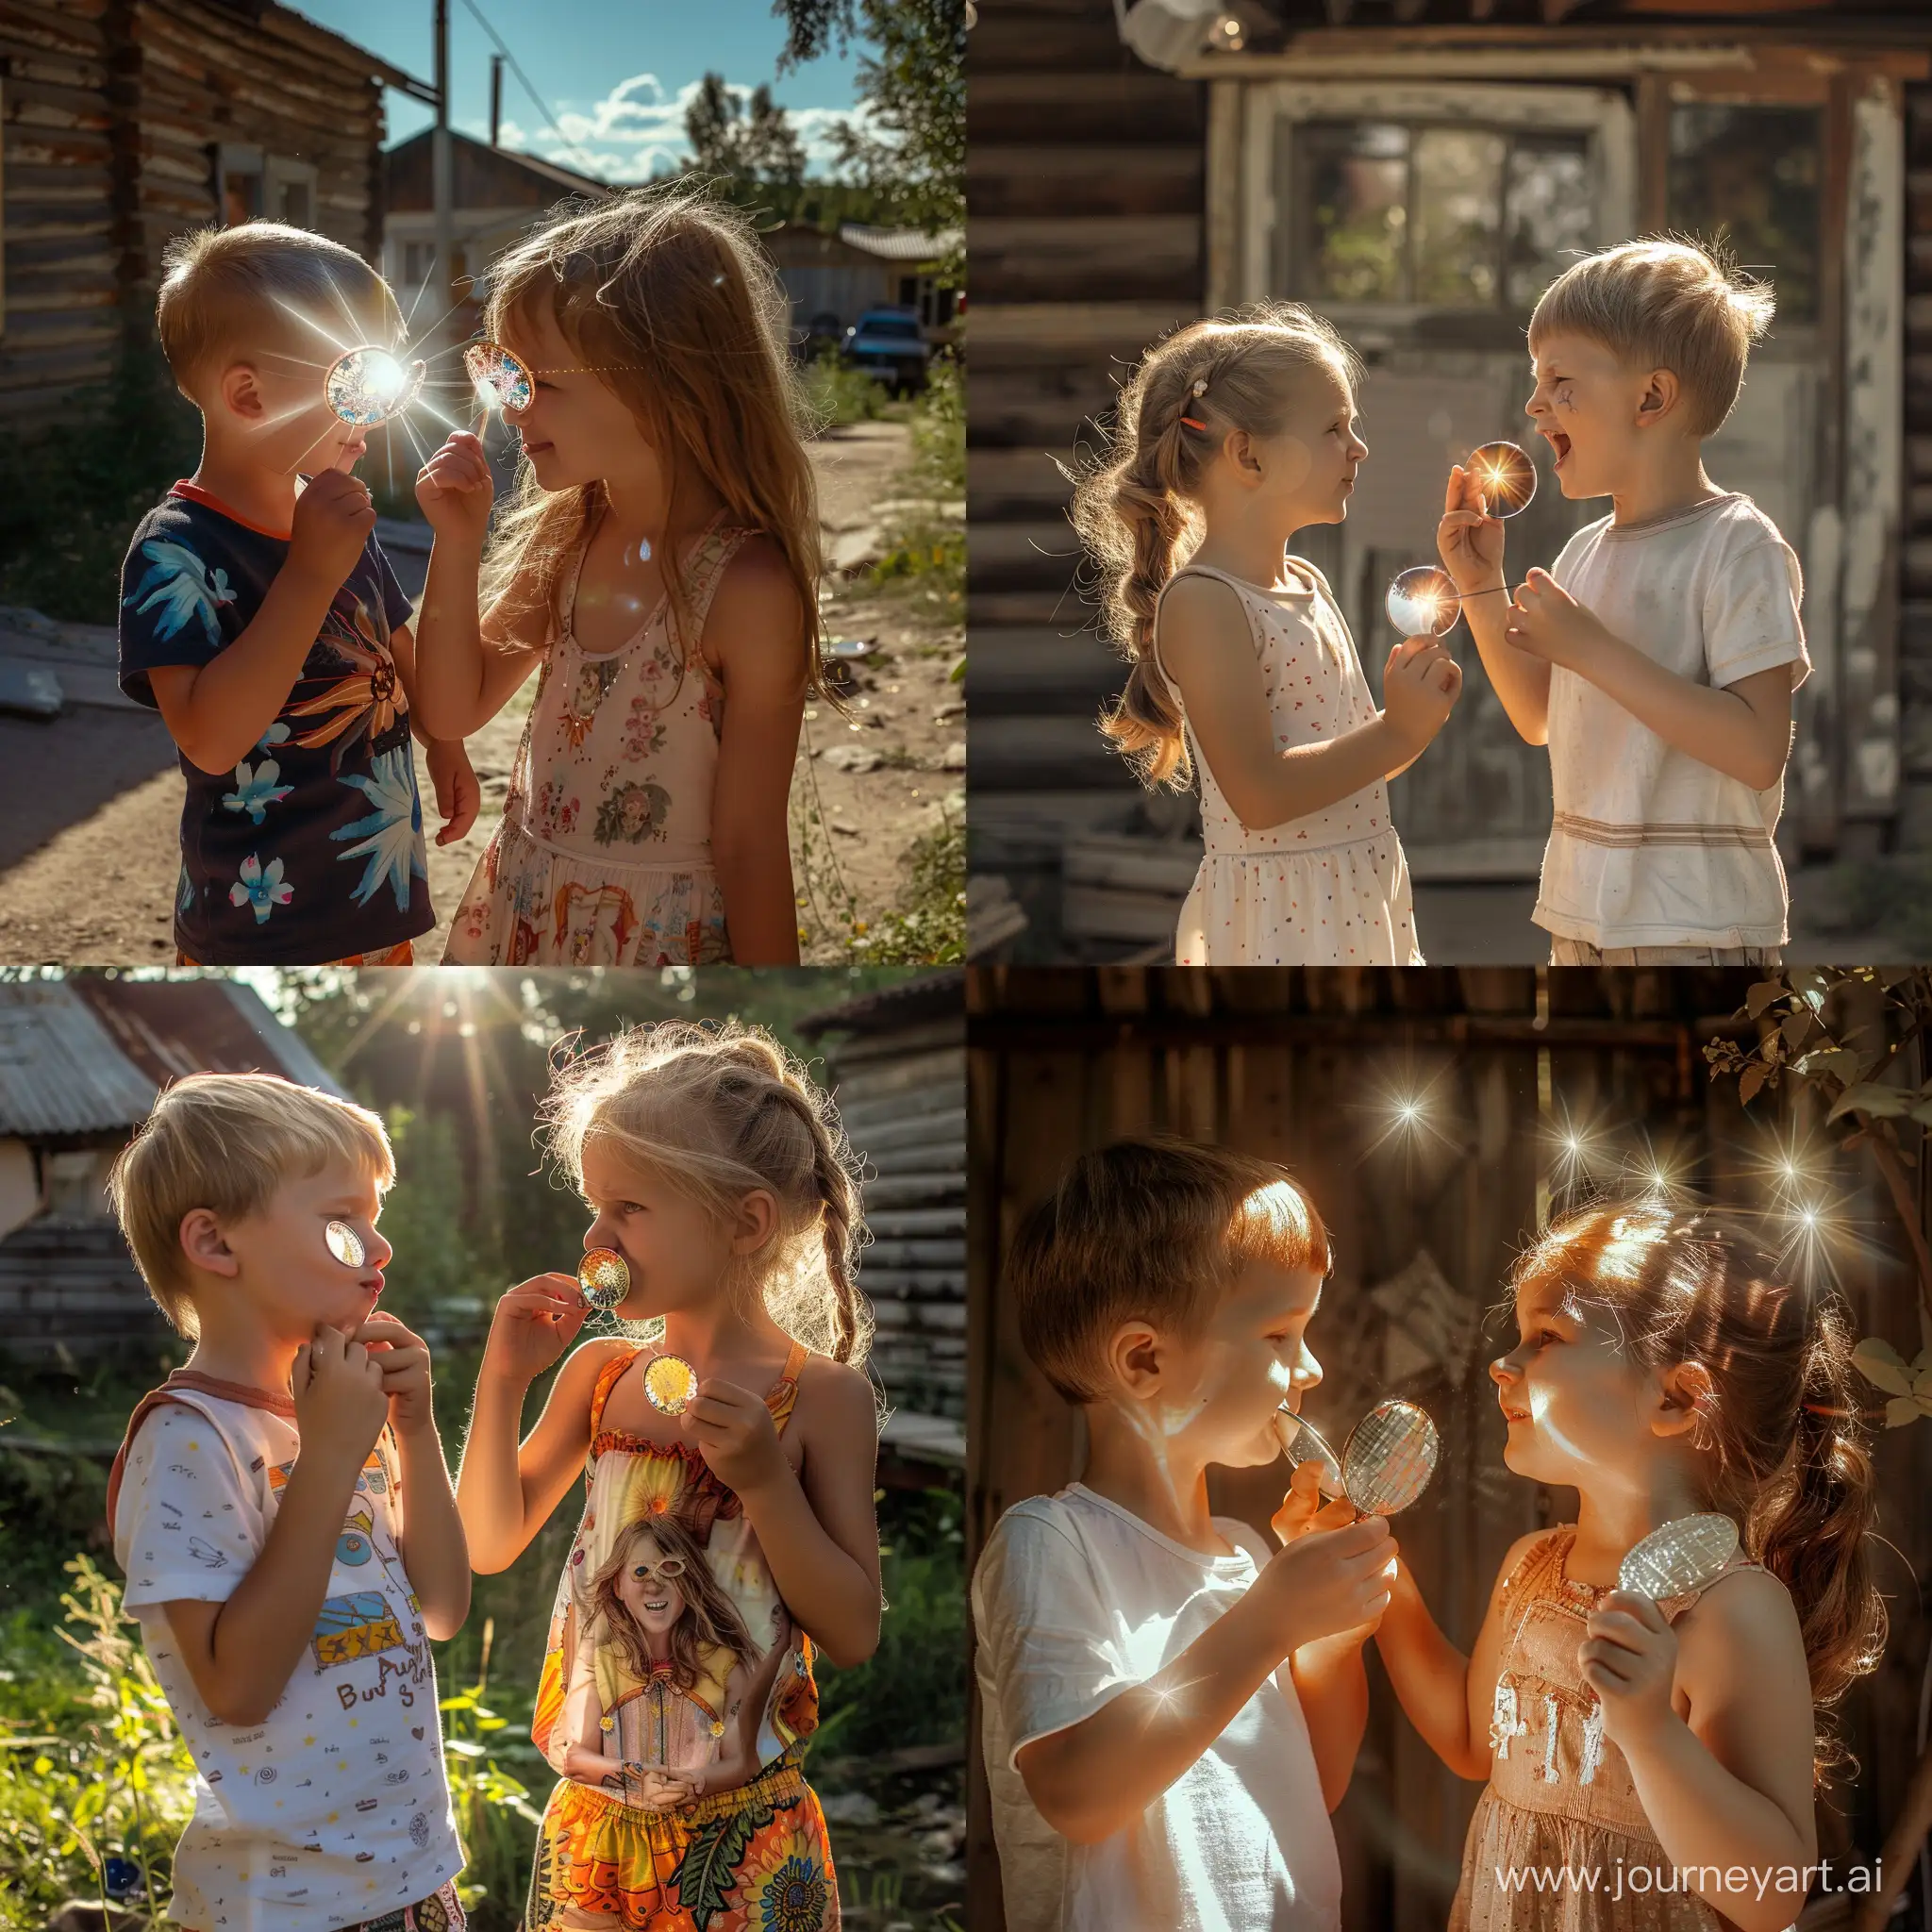 Joyful-Children-Creating-Sun-Glares-with-Mirrors-in-a-Russian-Village